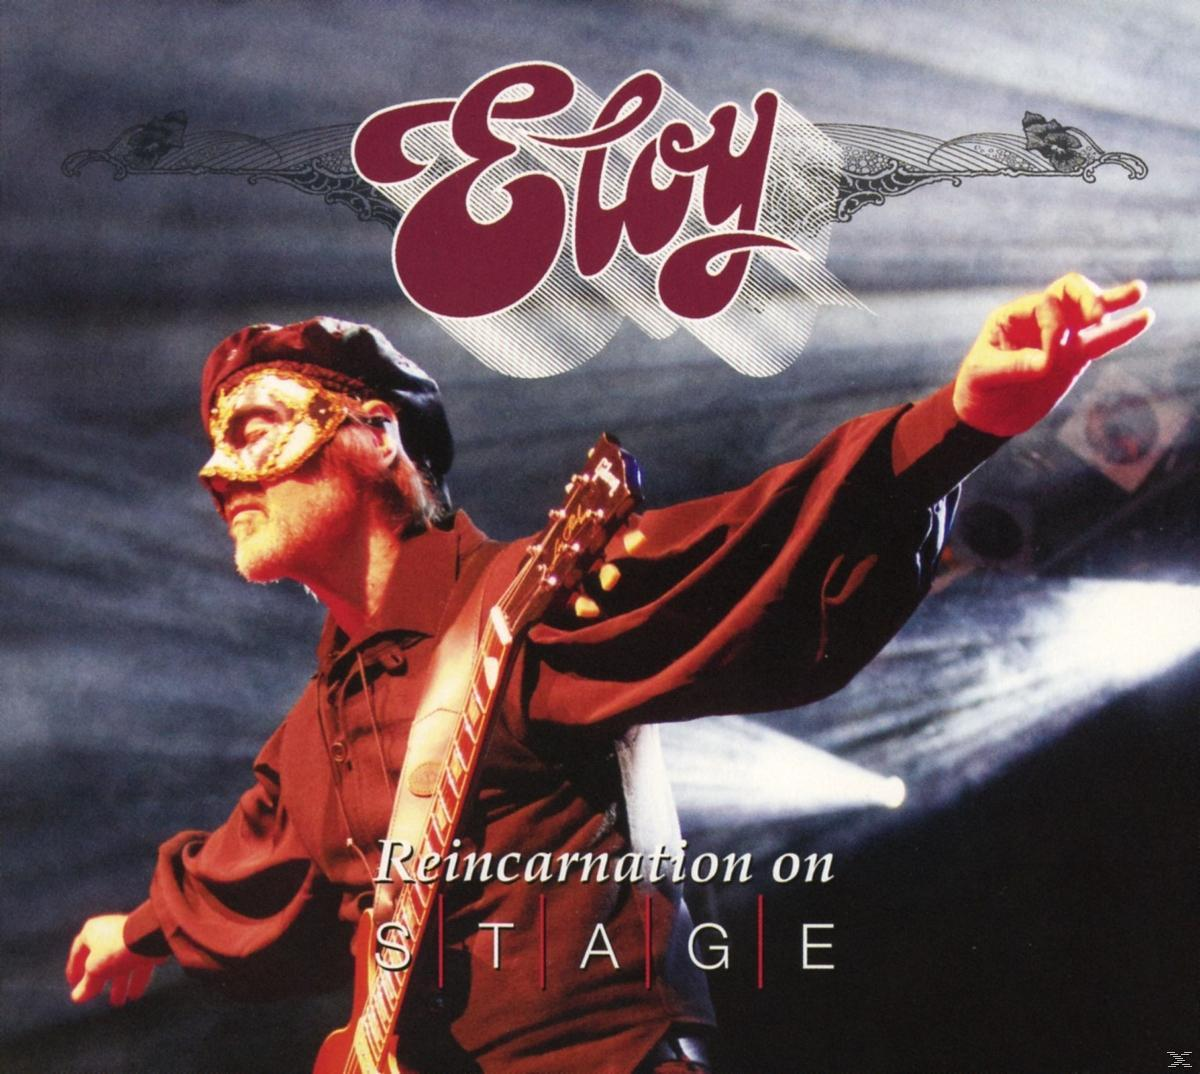 Eloy (CD) Stage - On Reincarnation - (Live)